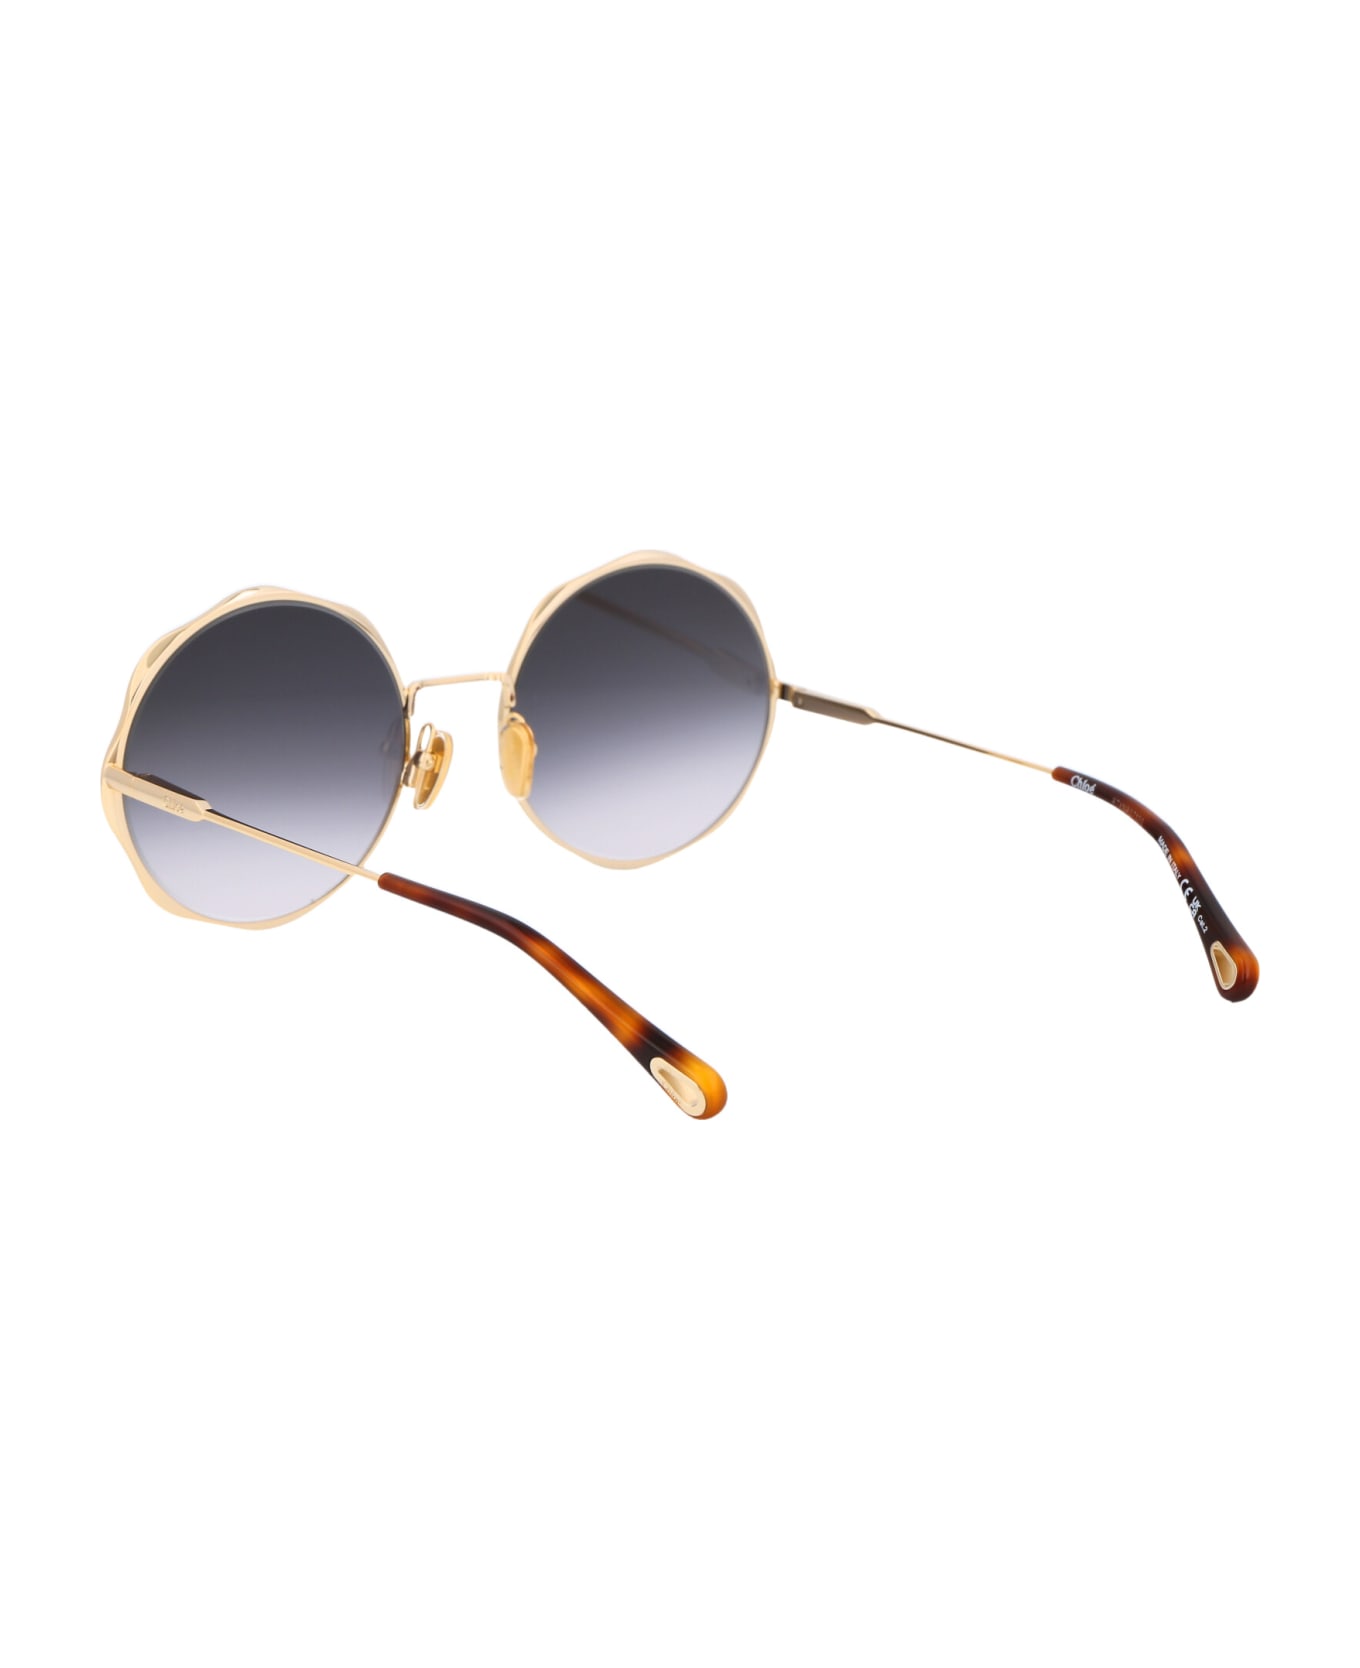 Chloé Eyewear Ch0184s Sunglasses - 001 GOLD GOLD GREY